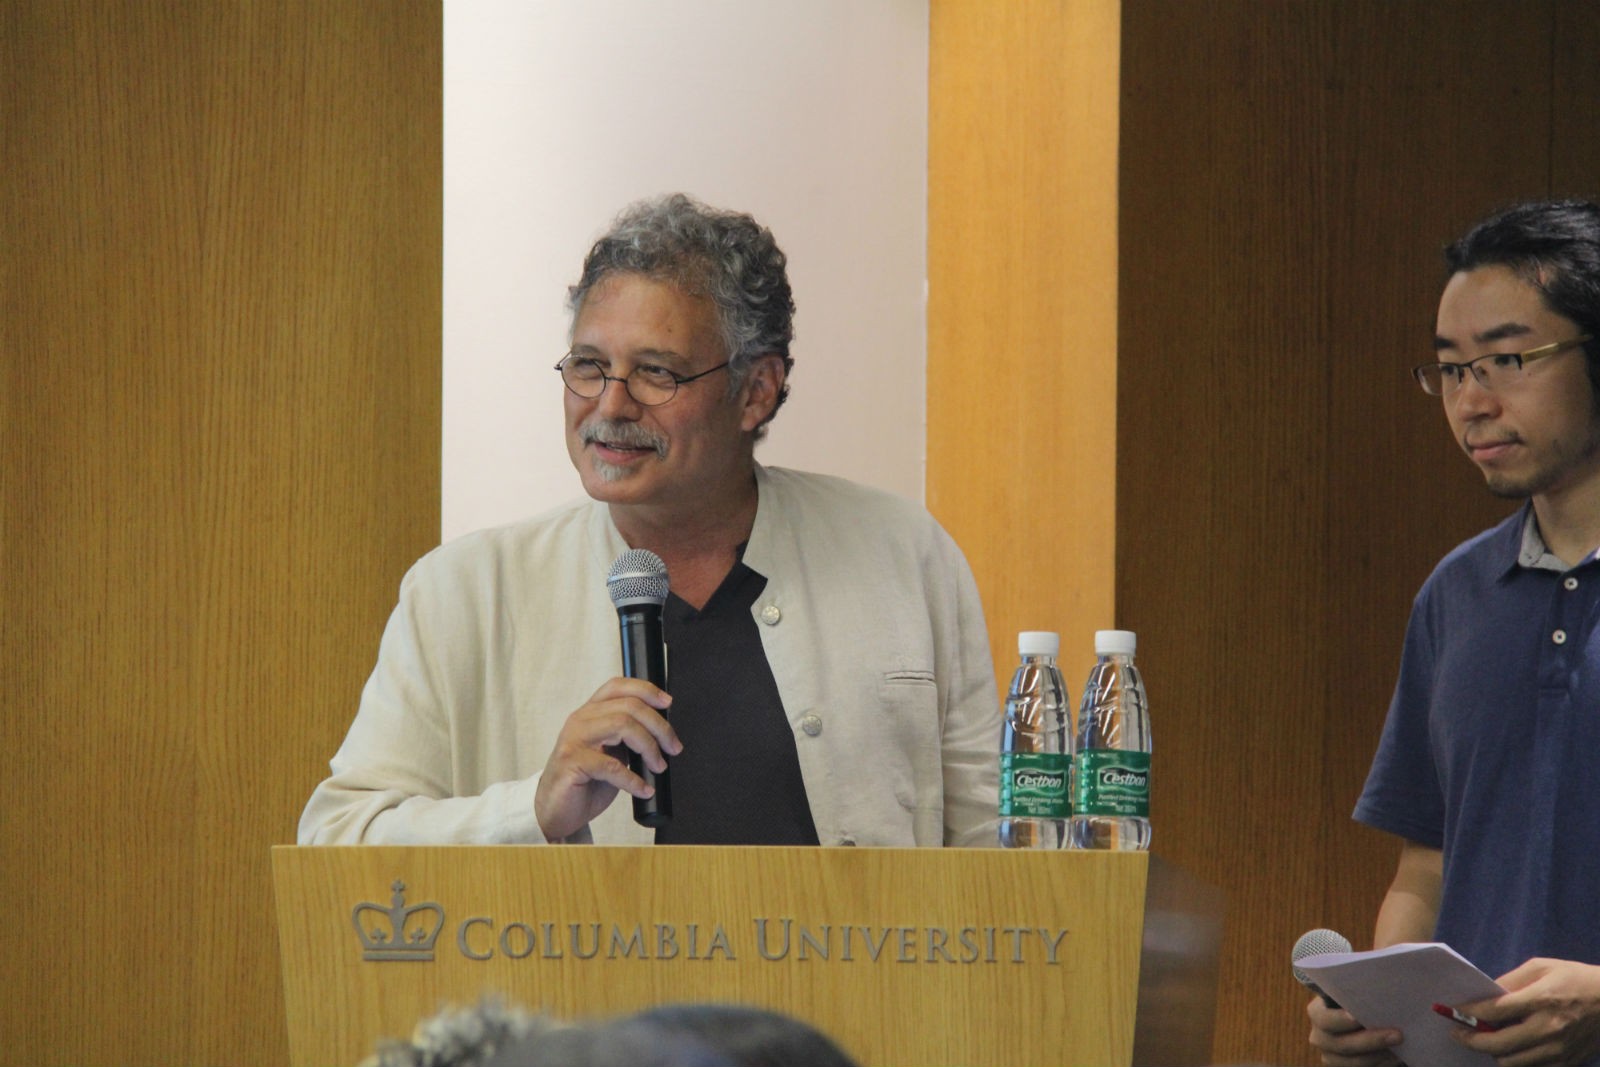 Professor Stathis Gourgouris